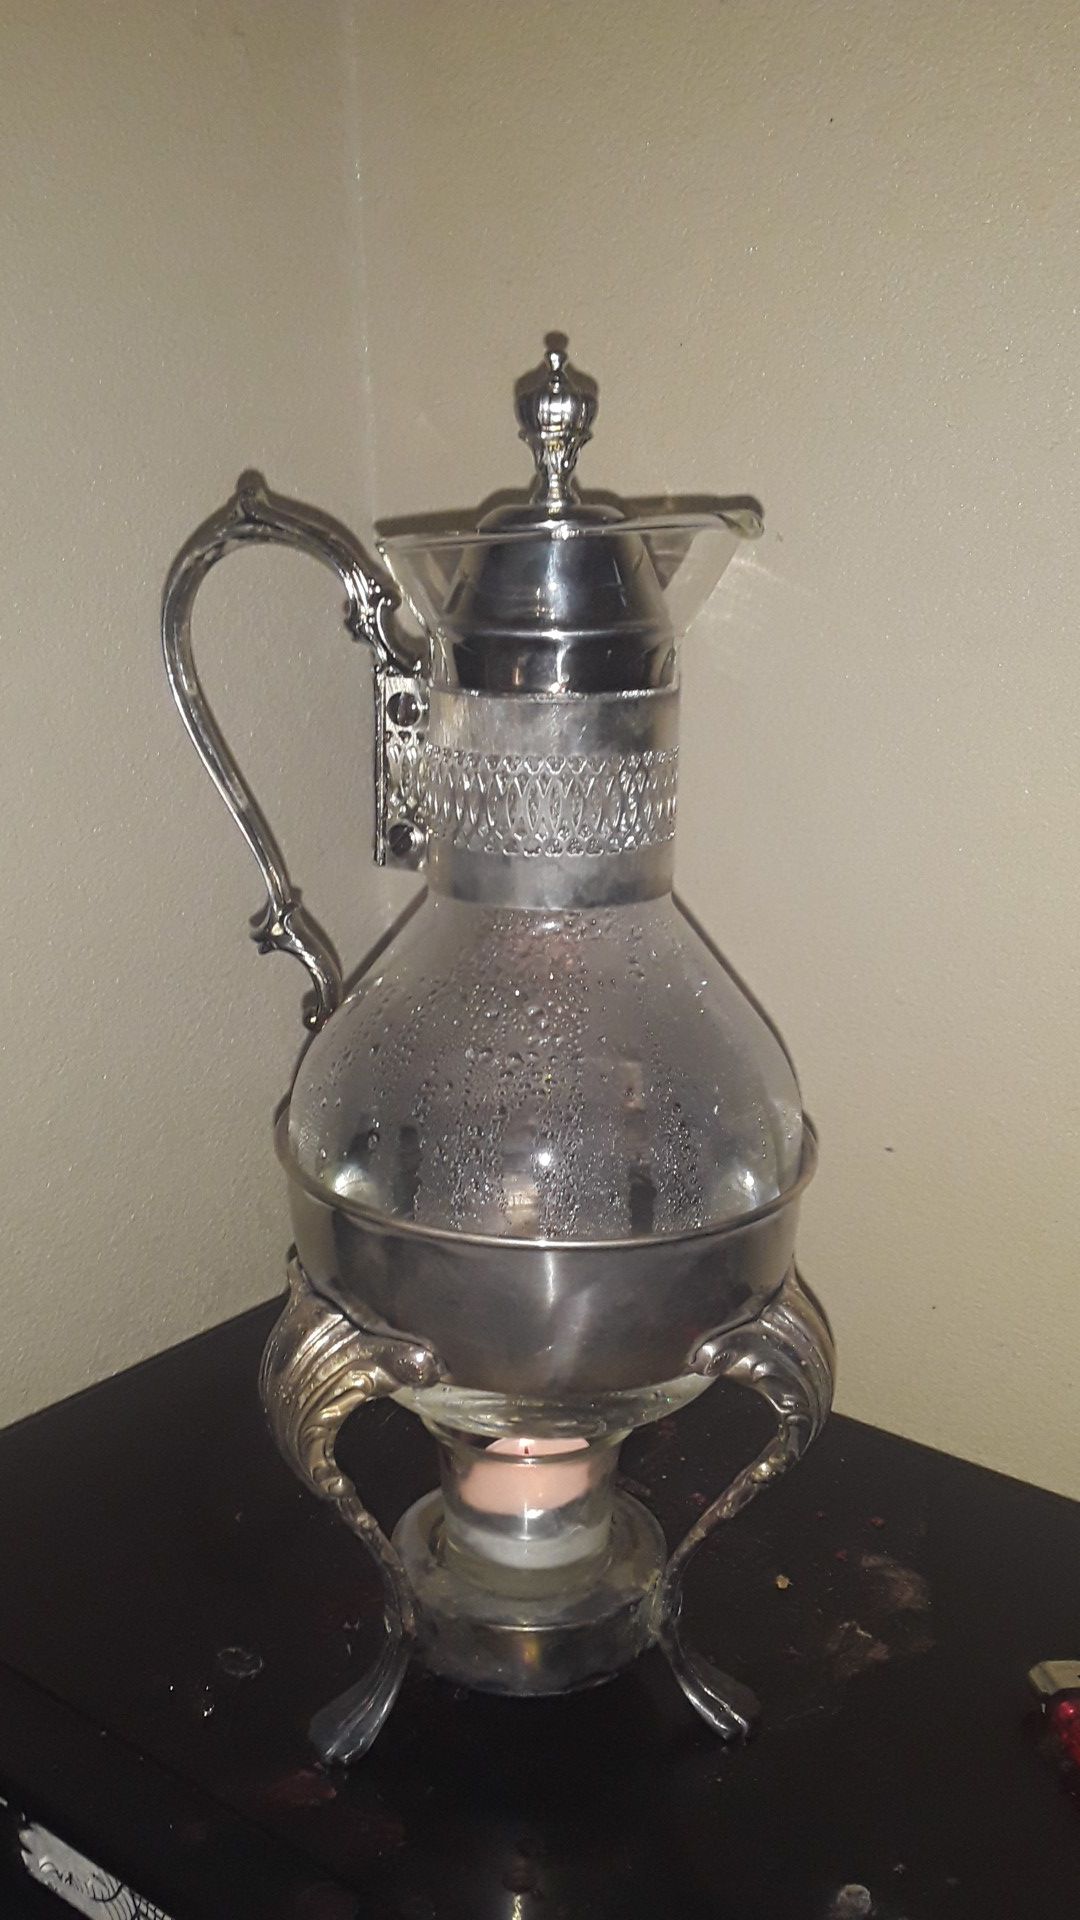 Vintage International Silver Company tea warmer. Great deal don't miss!